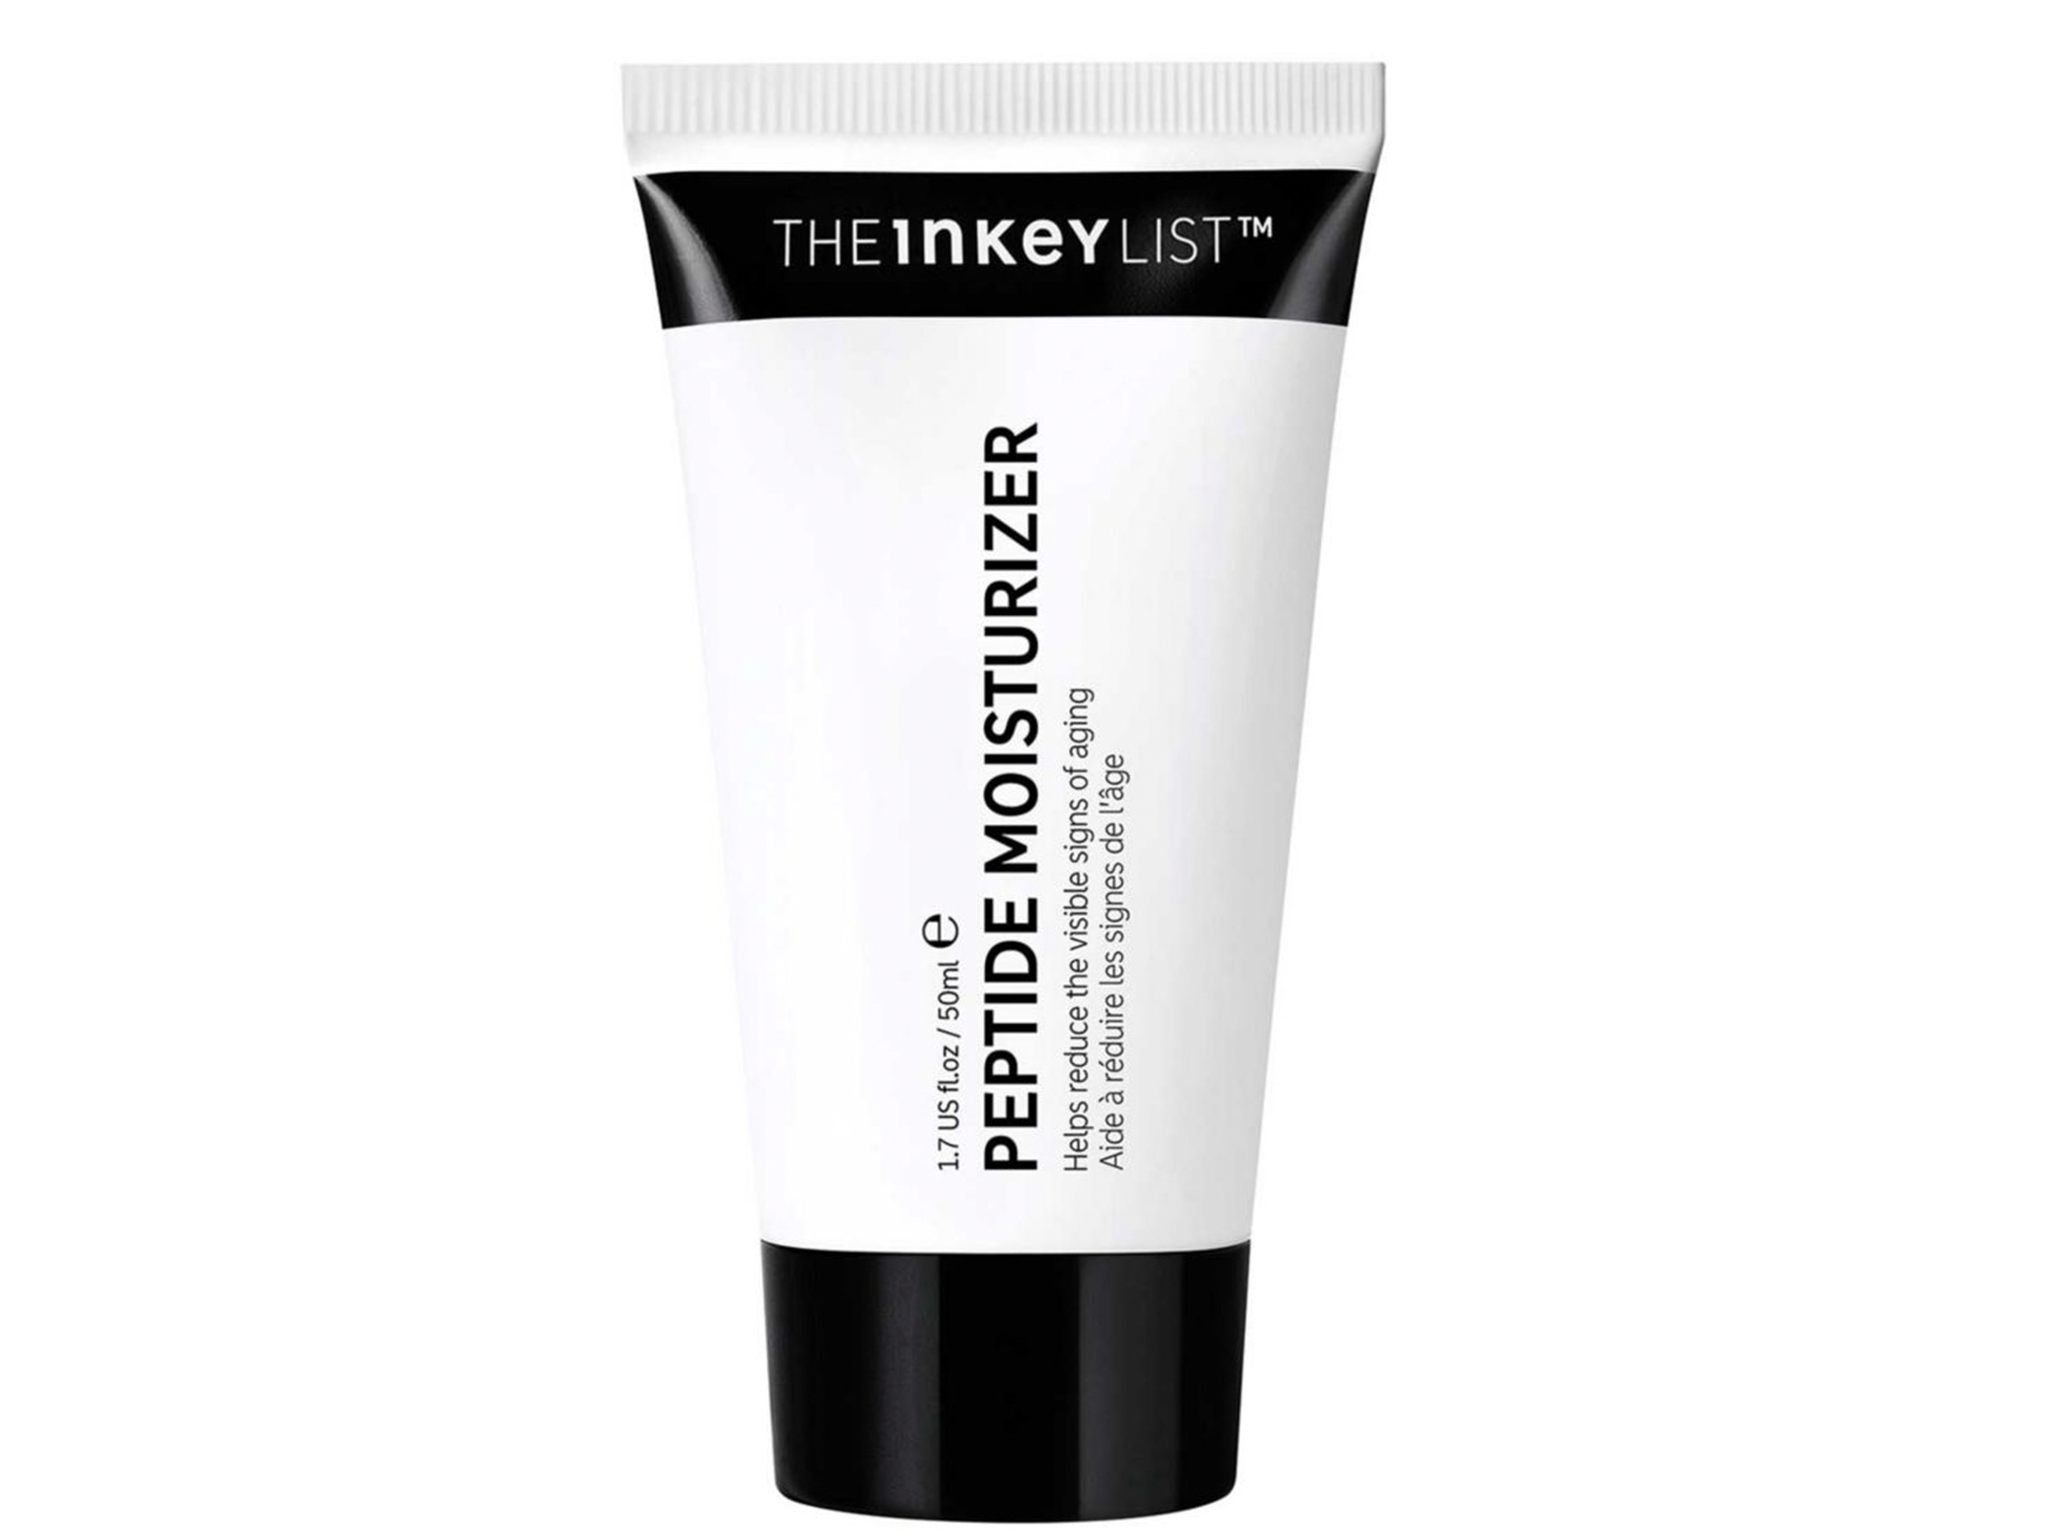 Bargain beauty buys The Inkey List peptide moisturiser